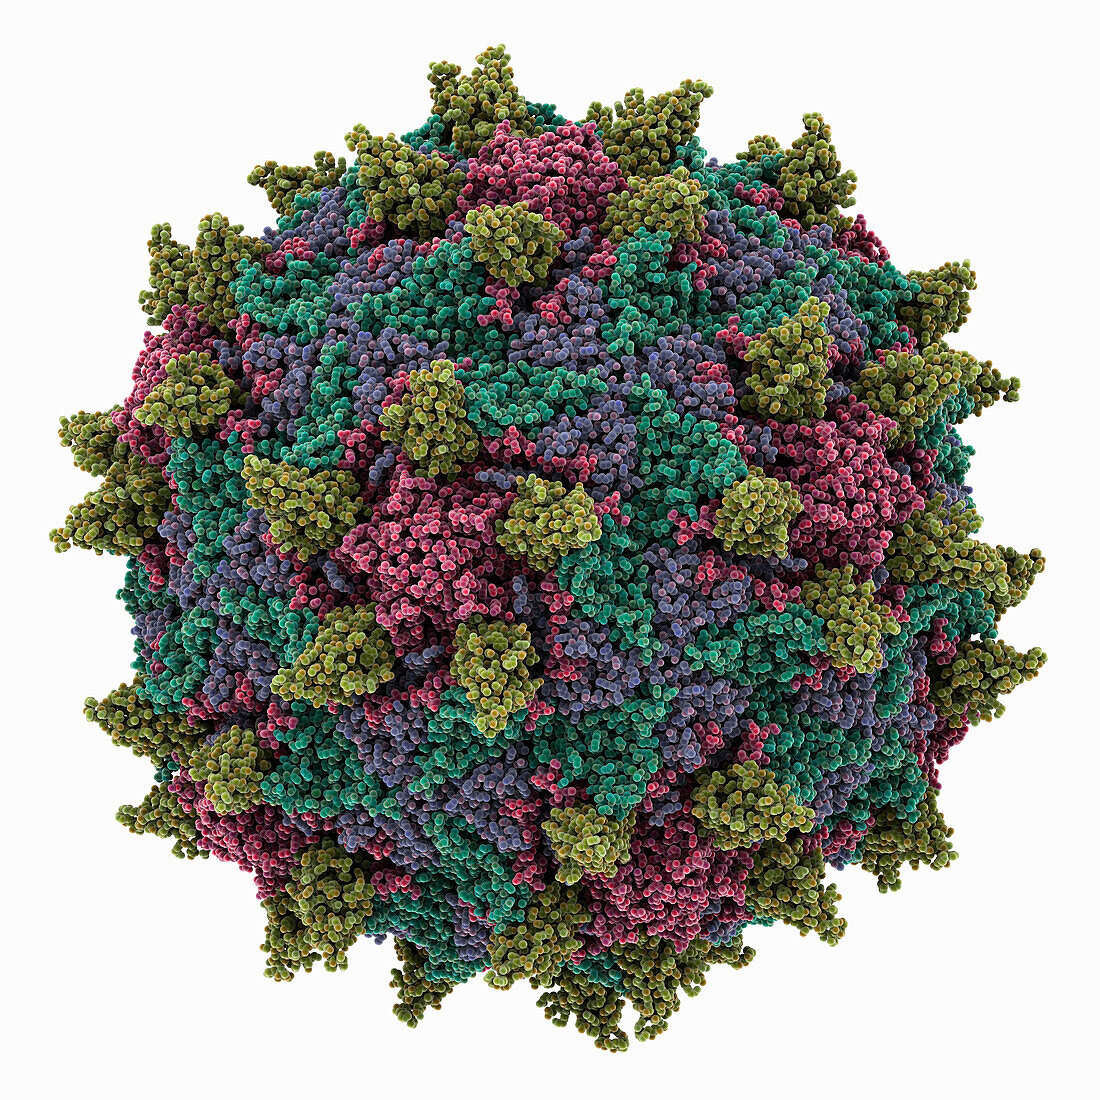 Poliovirus capsid complexed with nanobody, molecular model